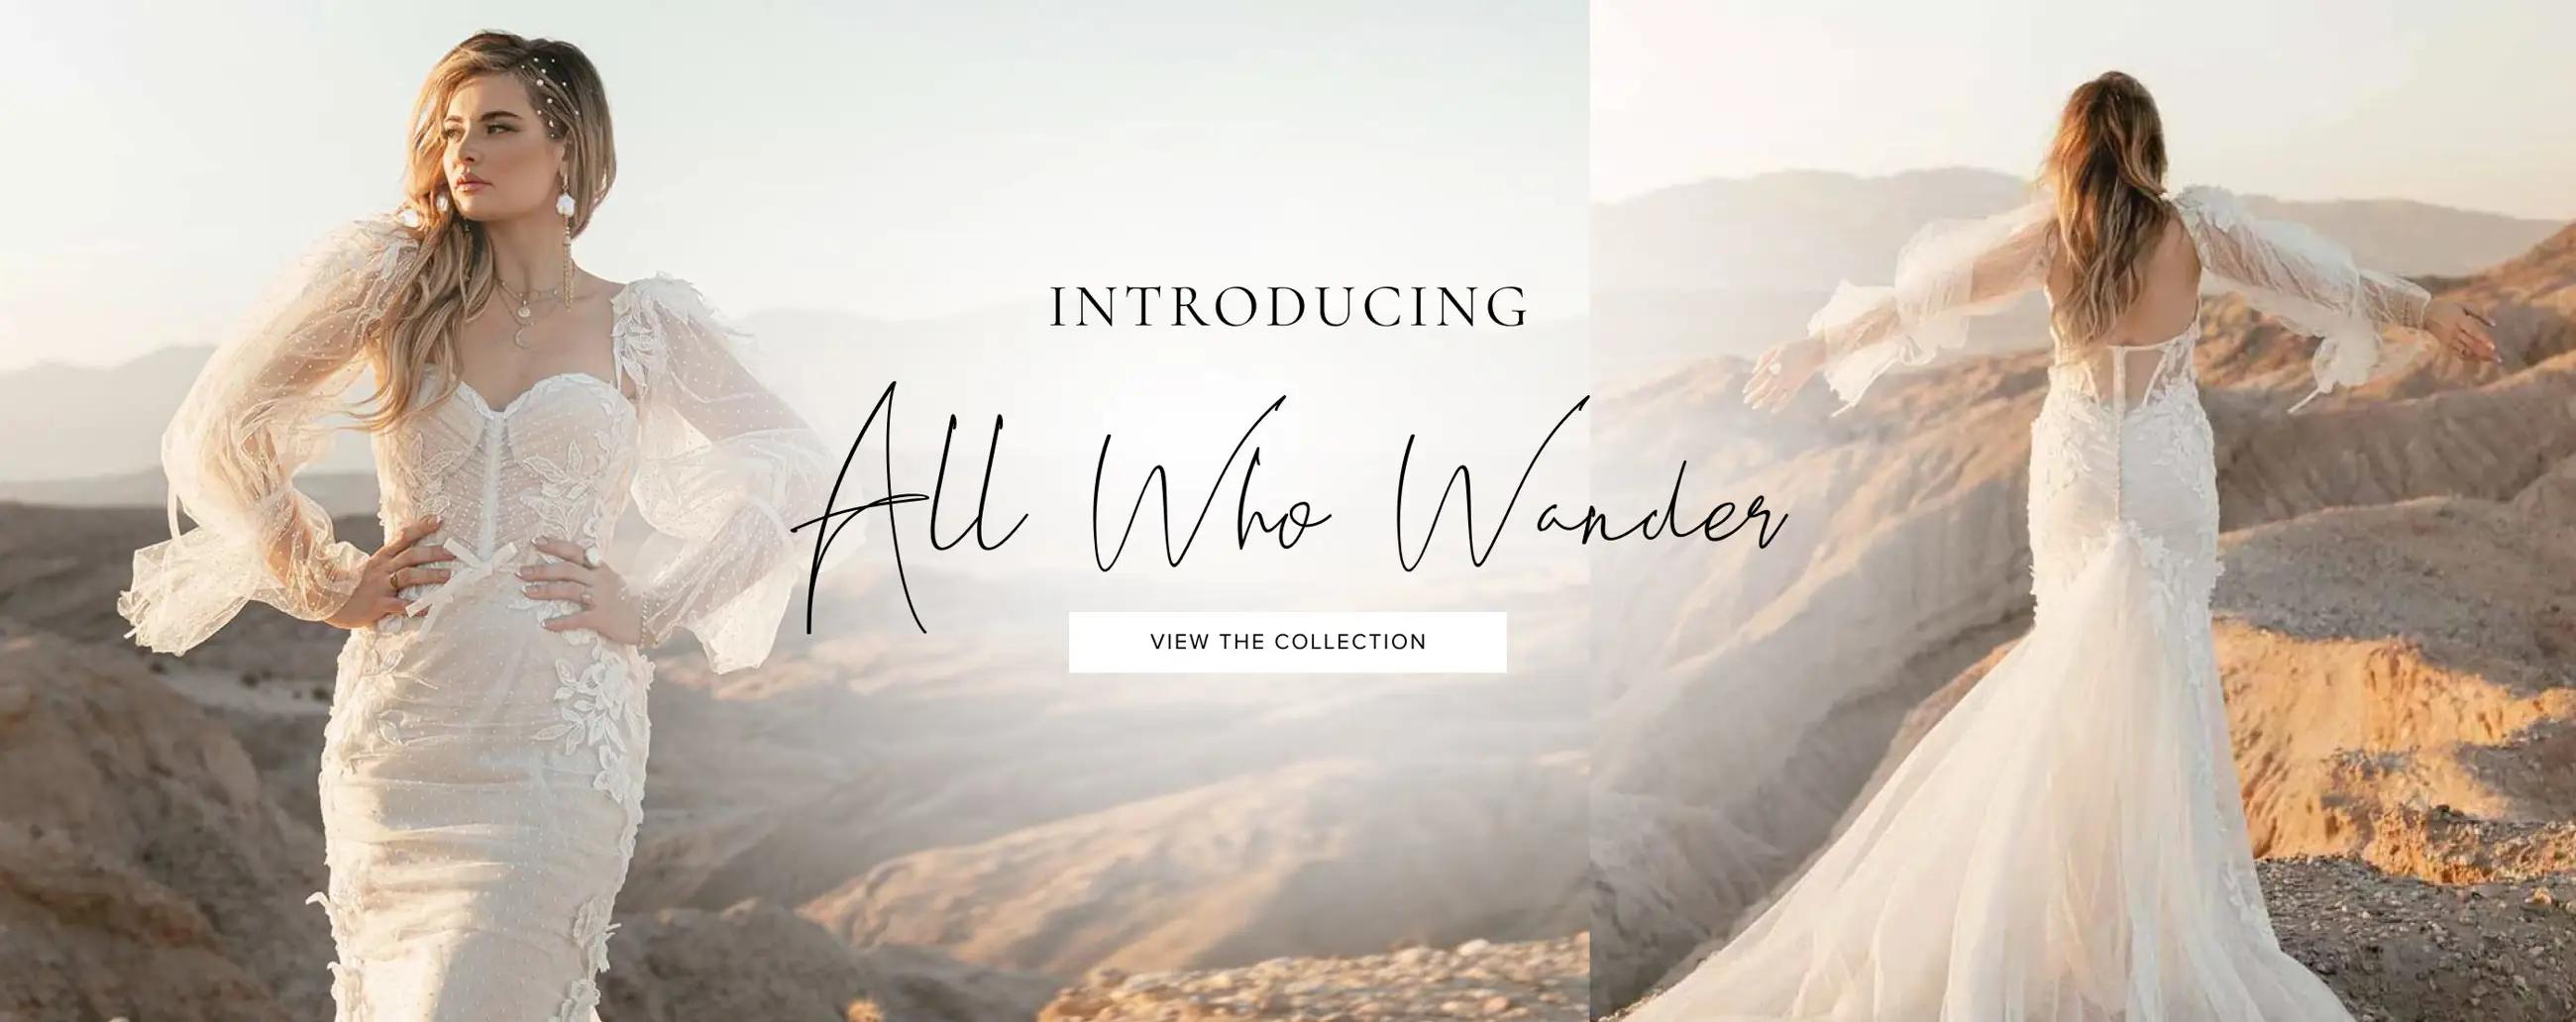 "All Who Wander" banner for desktop